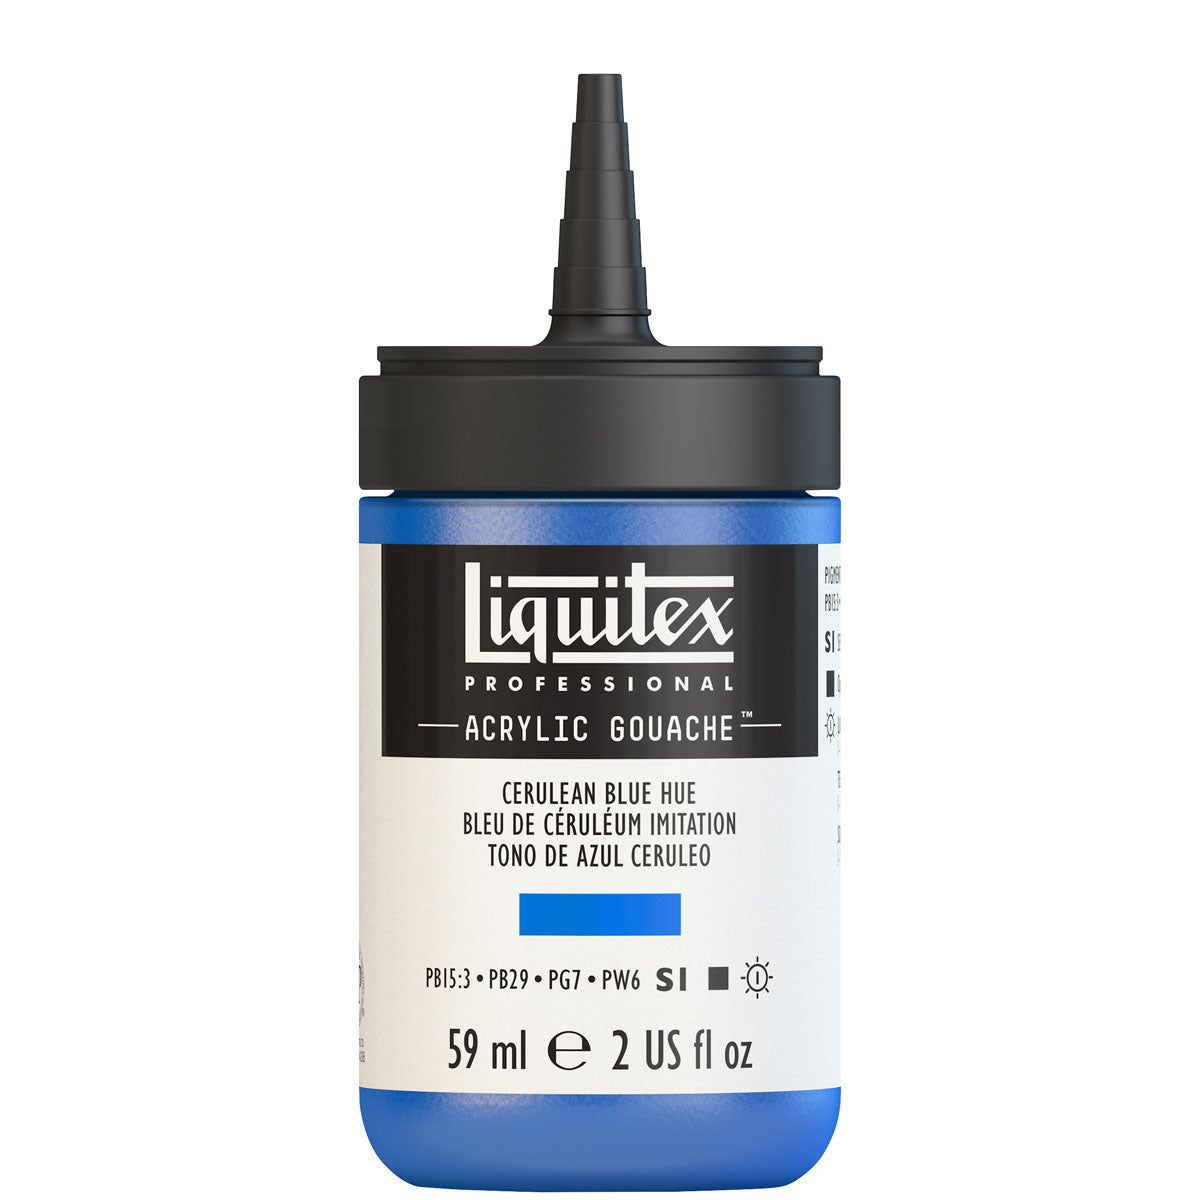 Liquitex - Acrylic Gouache 59ml S1 - Cerulean Blue Hue